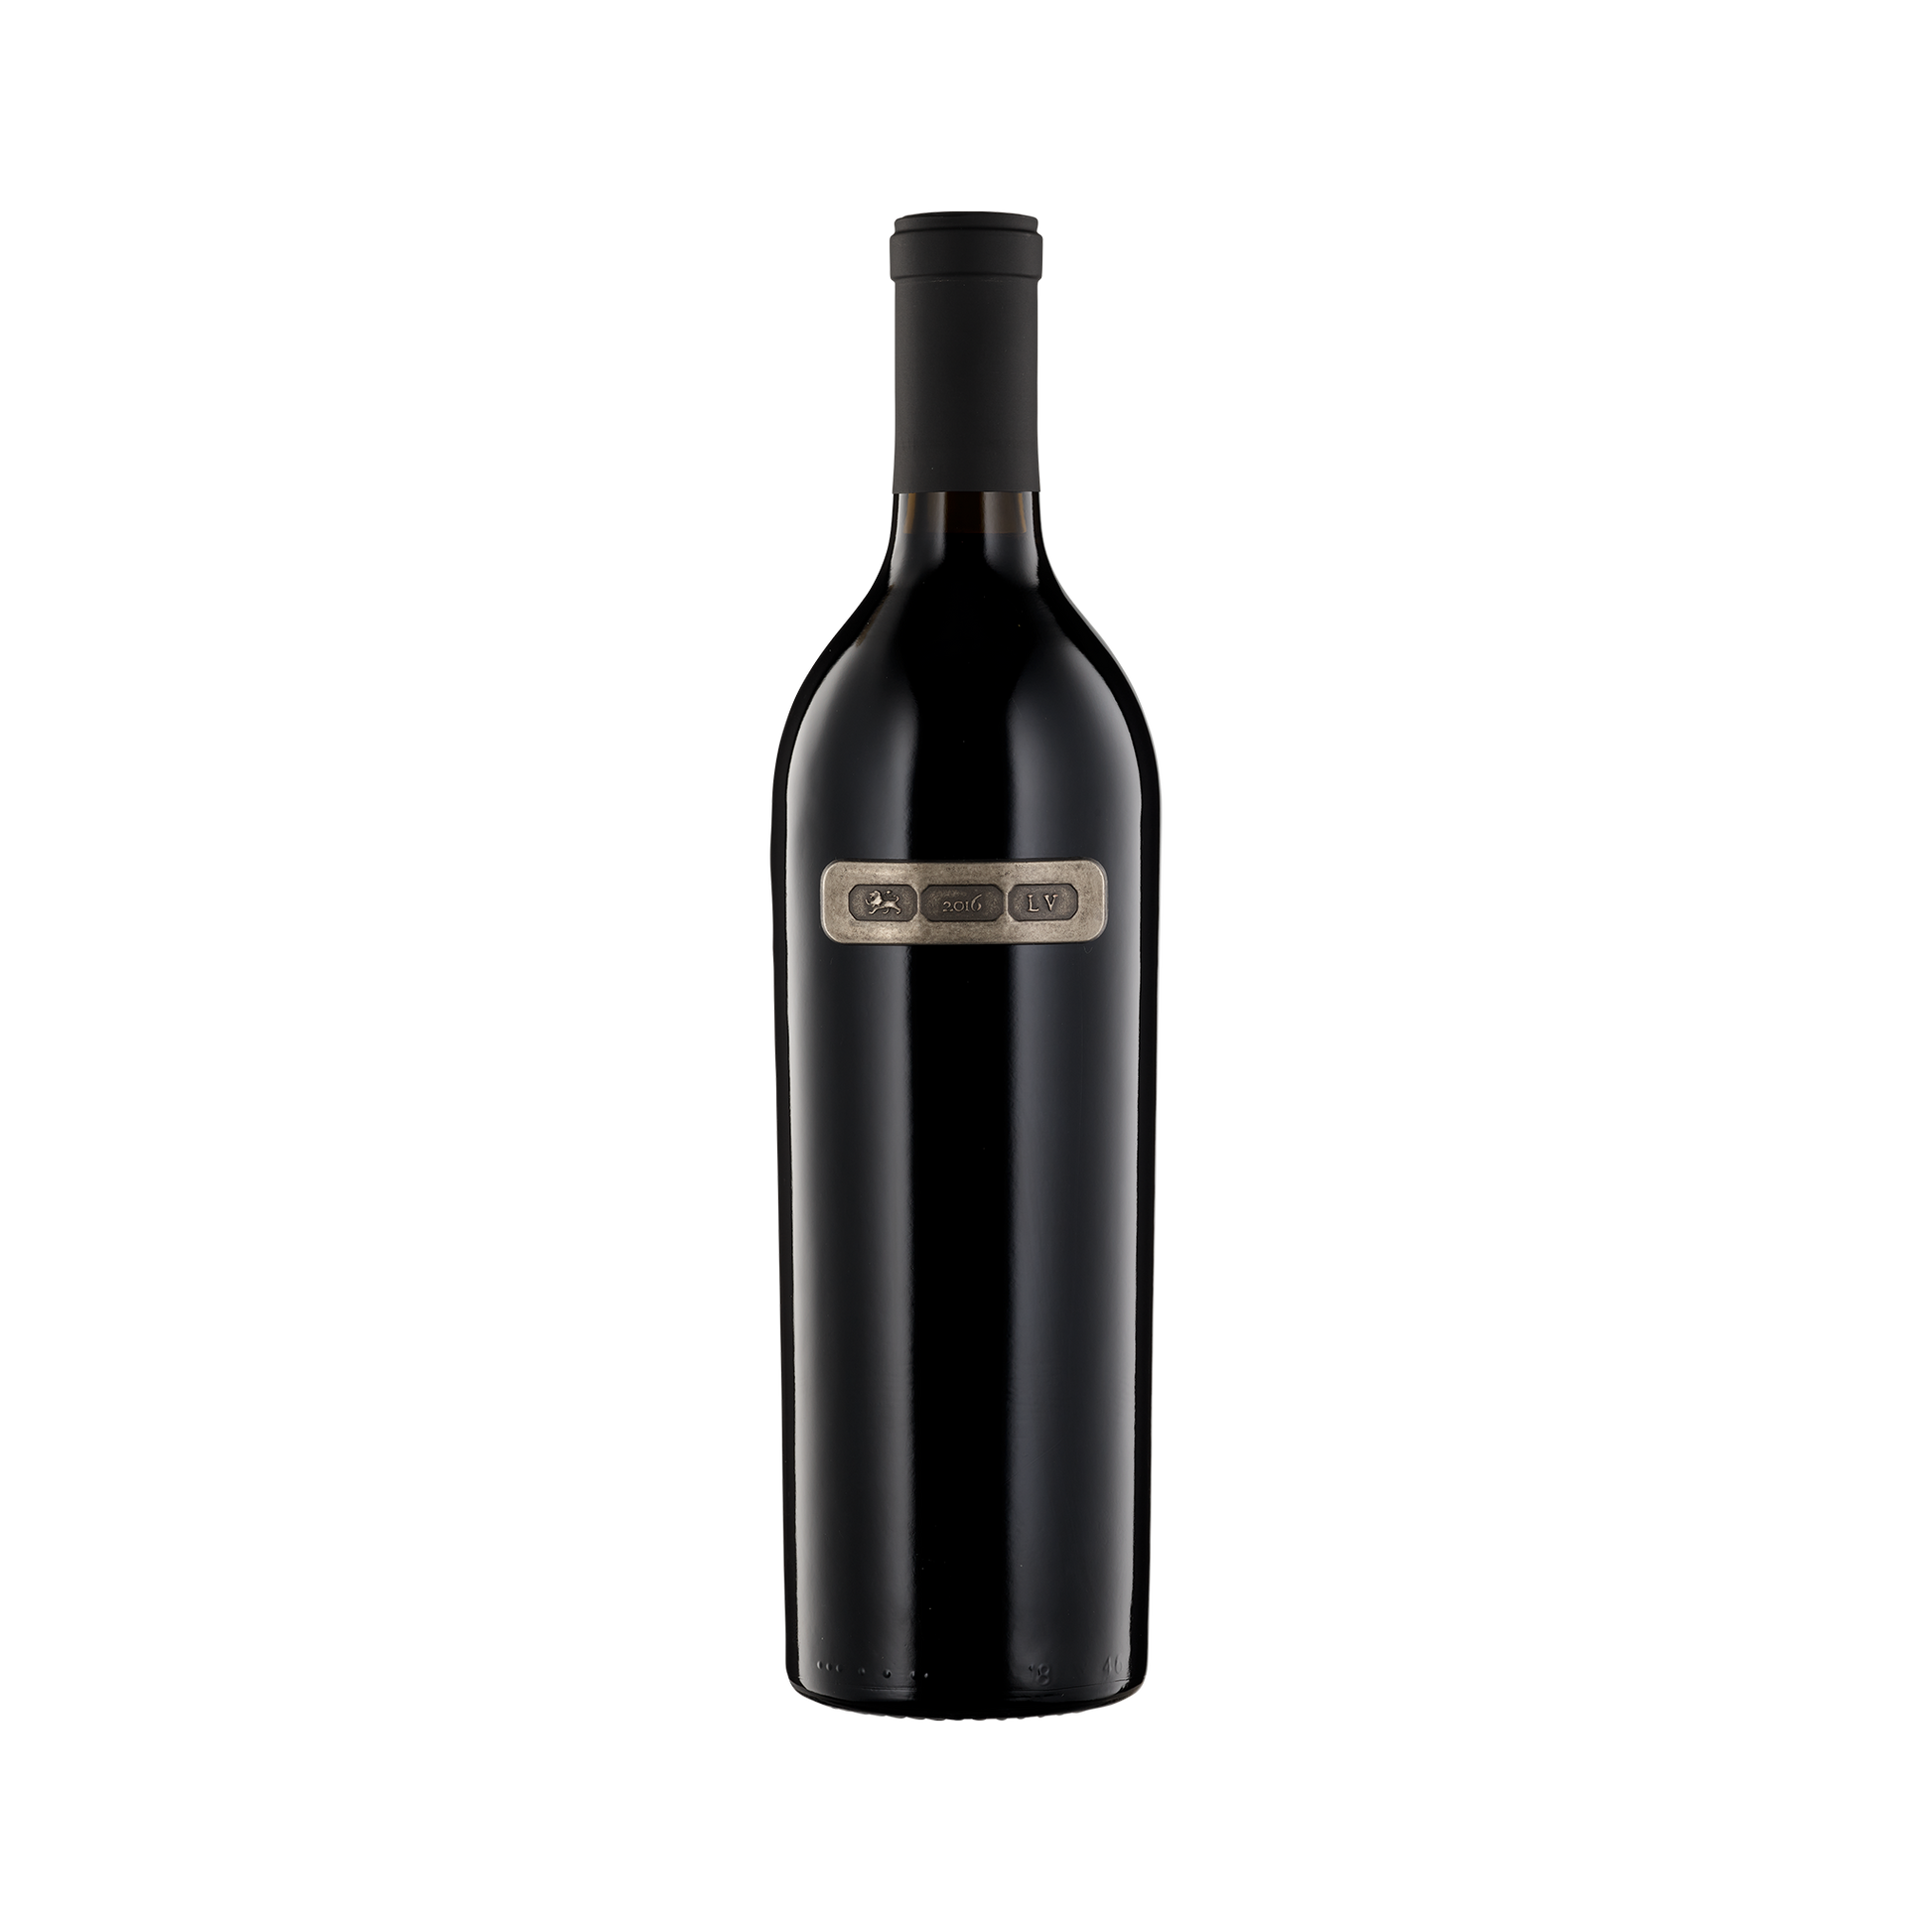 A bottle of Whitehall Lane Winery 2016 Cabernet Sauvignon Leonardini Vineyard